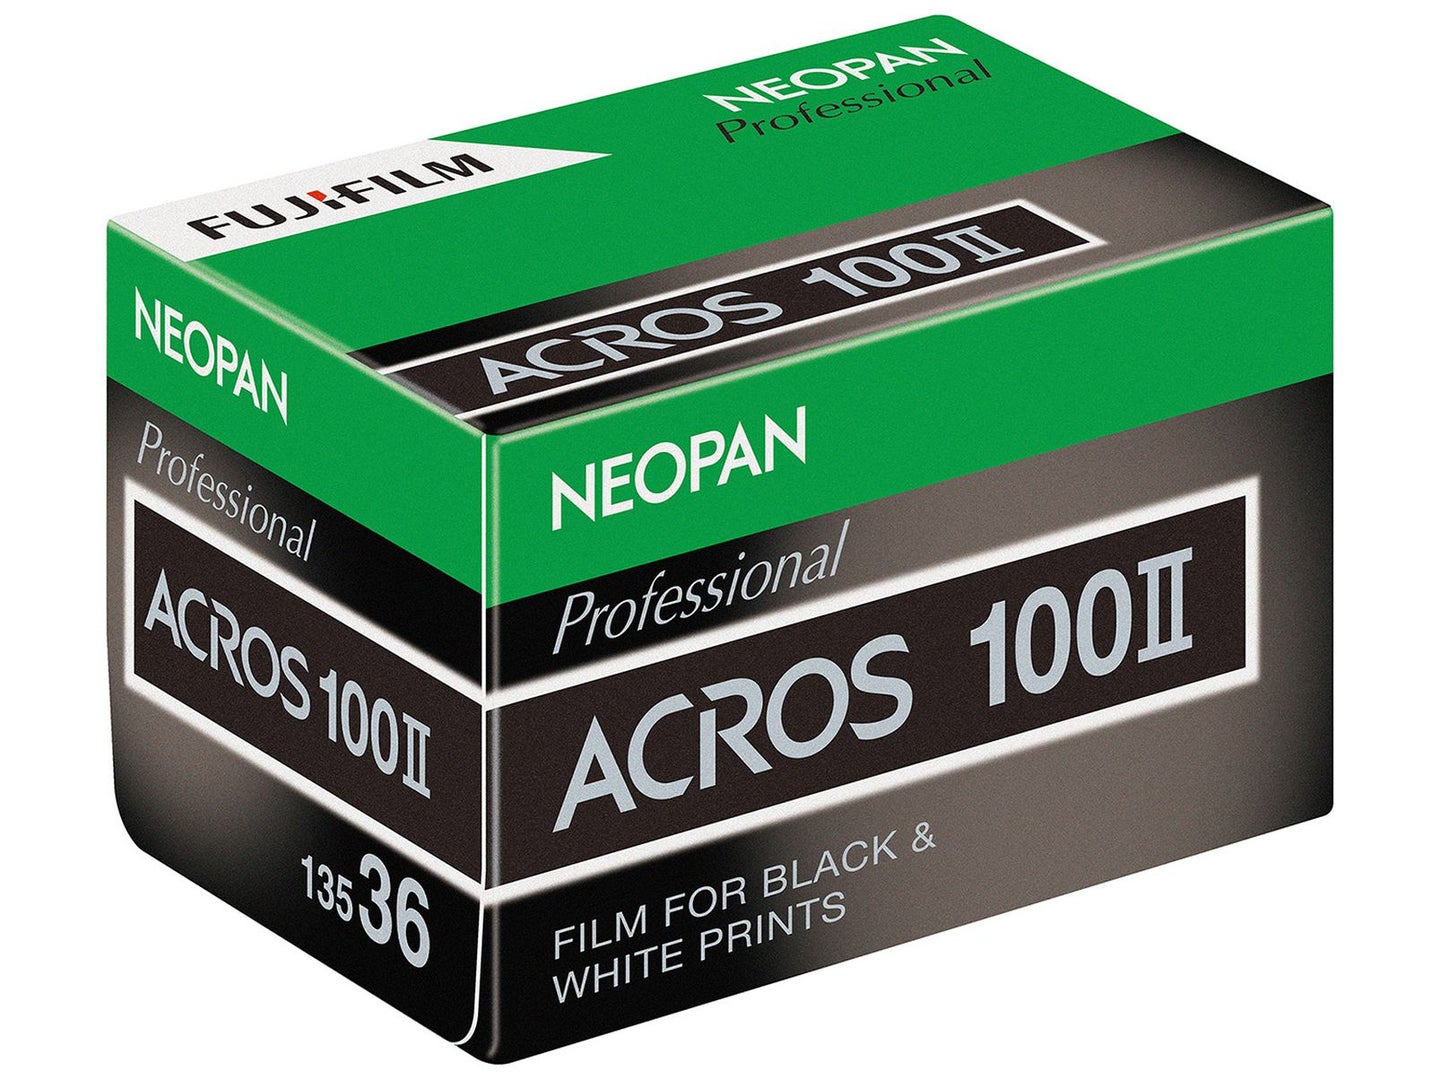 Fujifilm Neopan 100 Acros II film